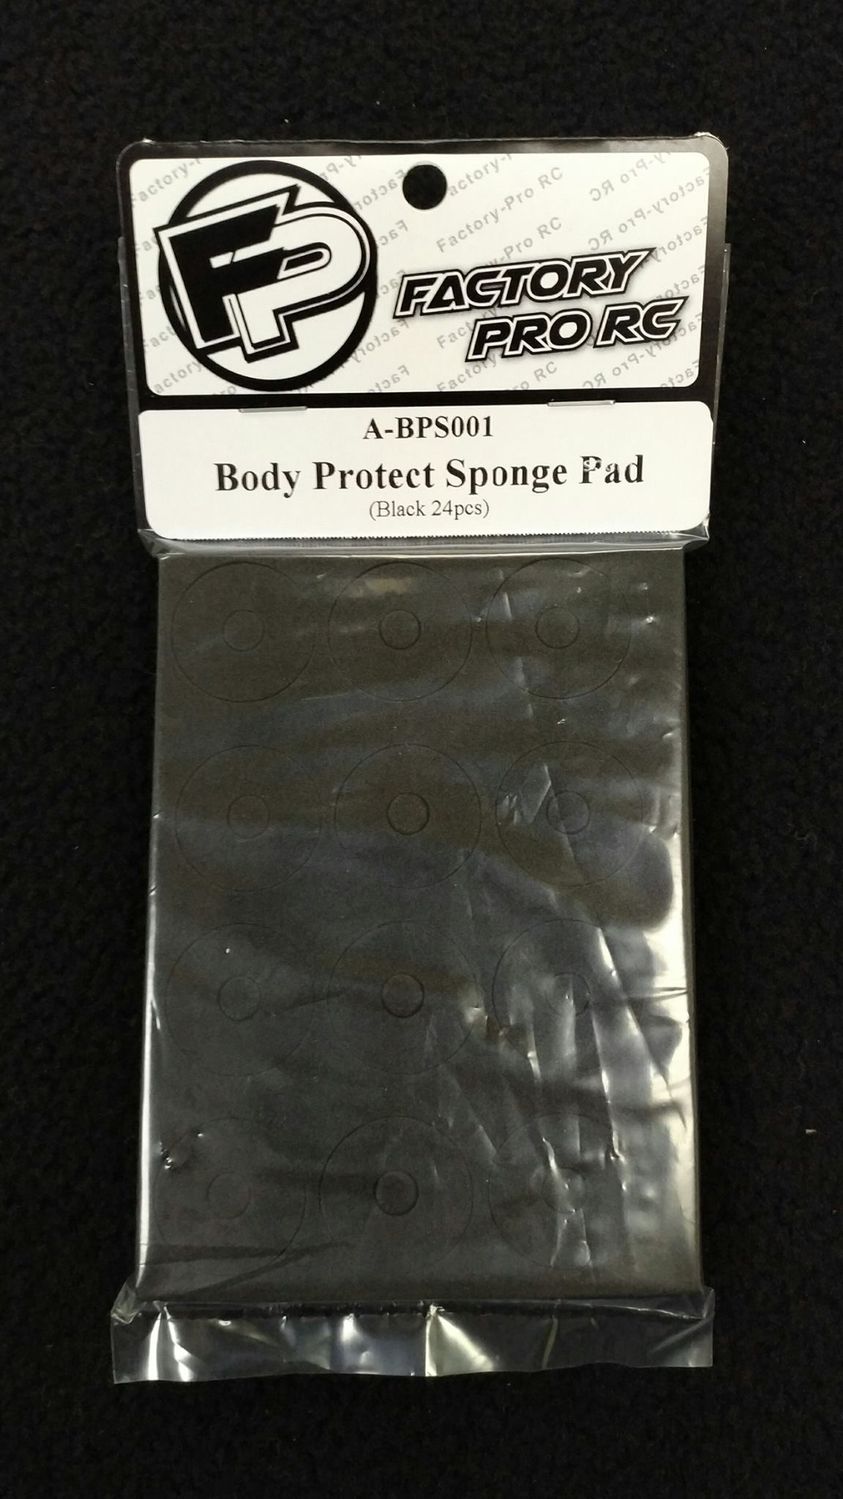 Body Protect Sponge Pad (24pcs)